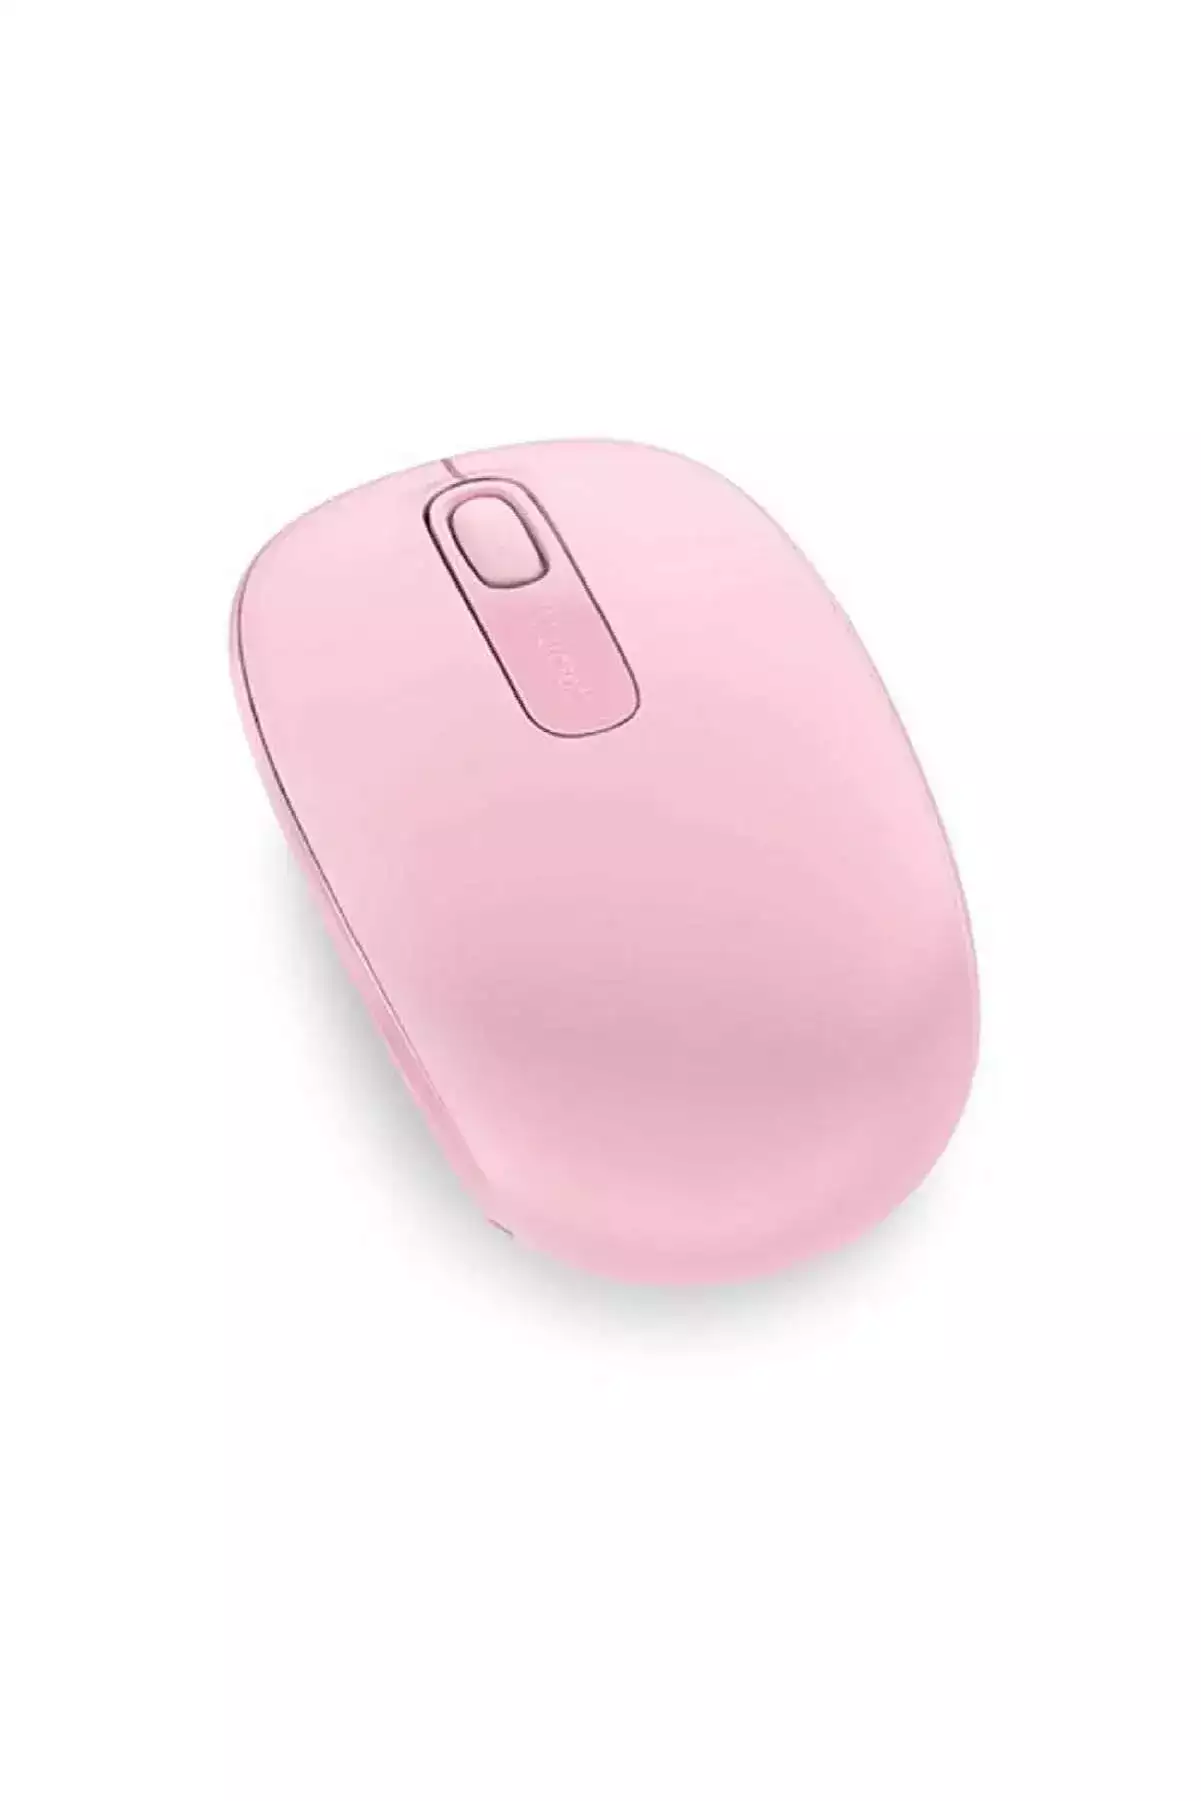 Microsoft Kablosuz Mouse 1850 Pembe	U7Z-00023